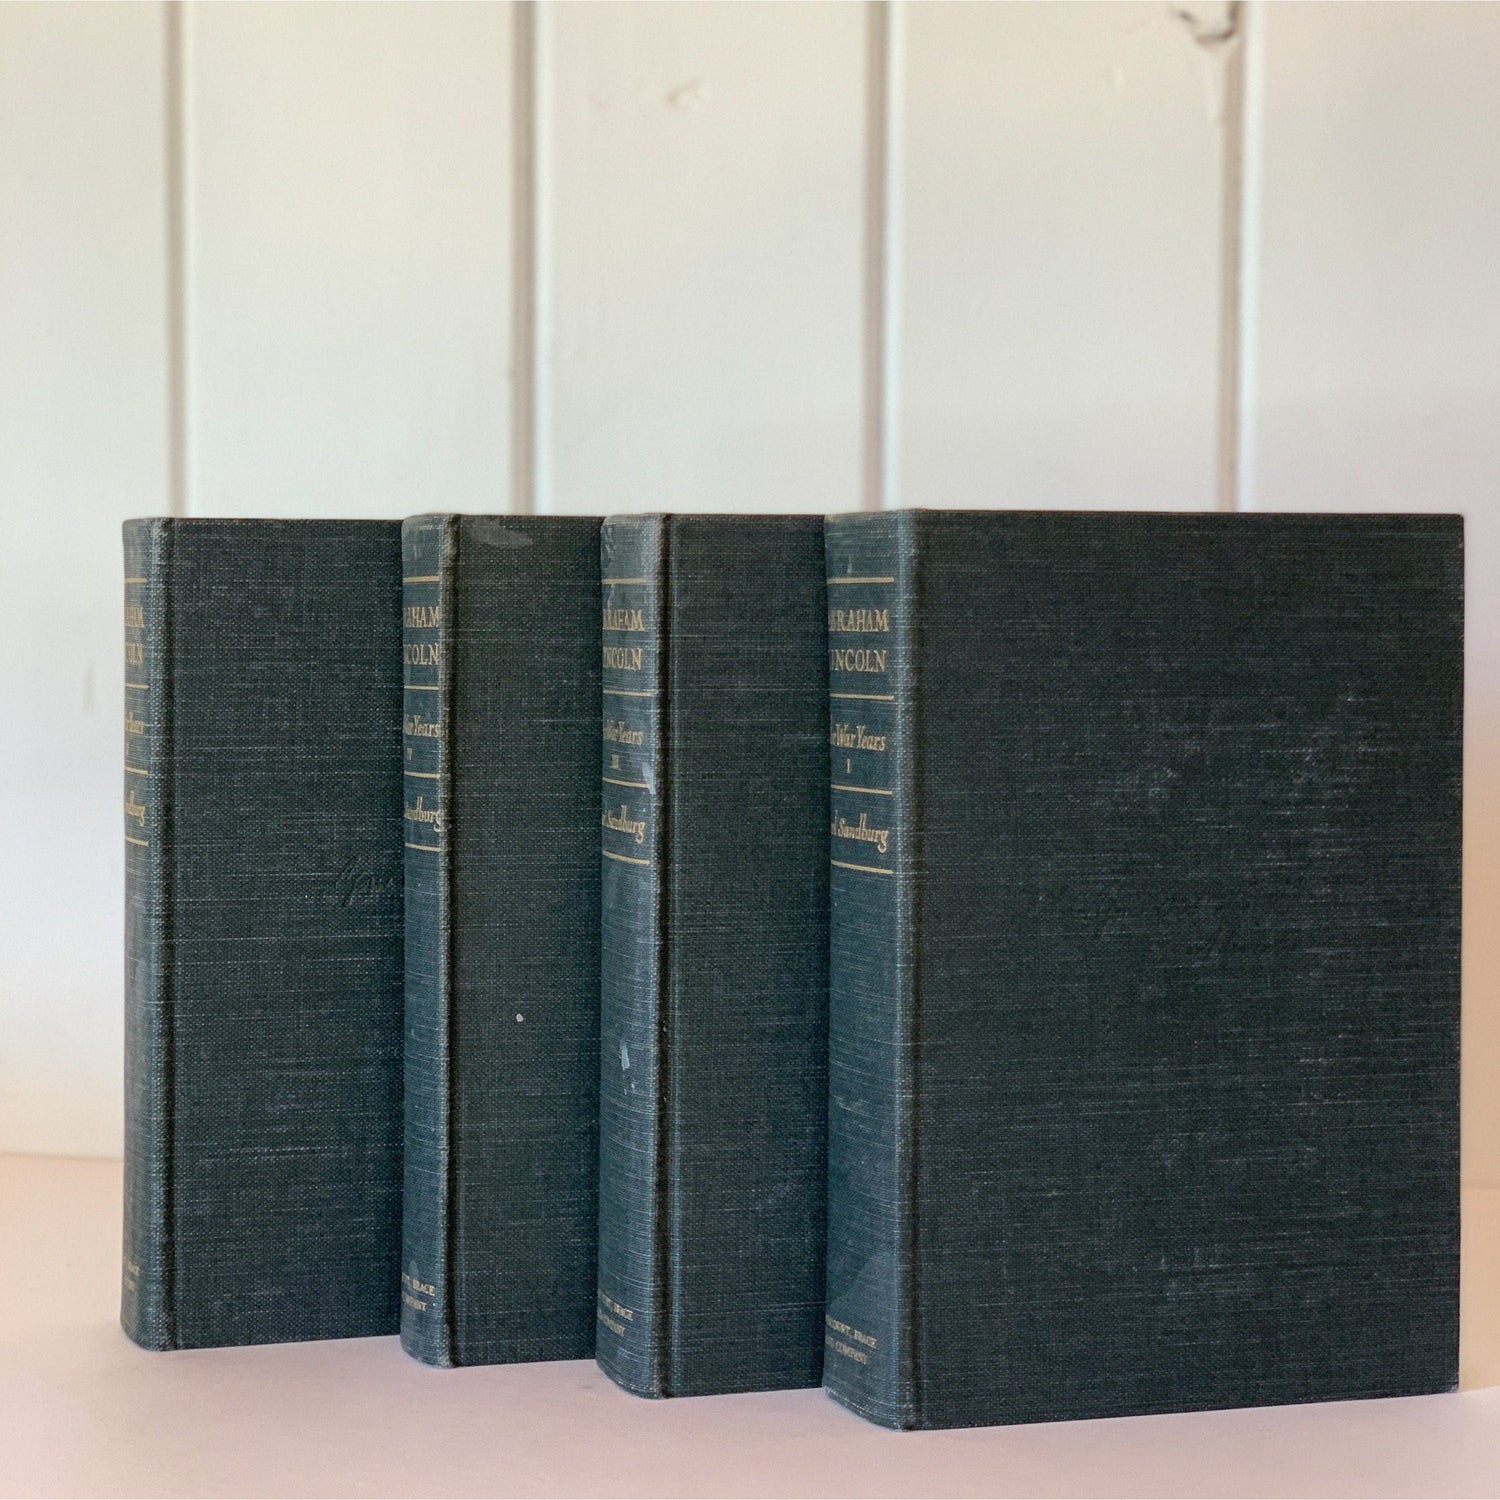 Abraham Lincoln The War Years, Carl Sandburg, 1959 Four Volume Book Set, Denim Blue Hardcover Books, Civil War History